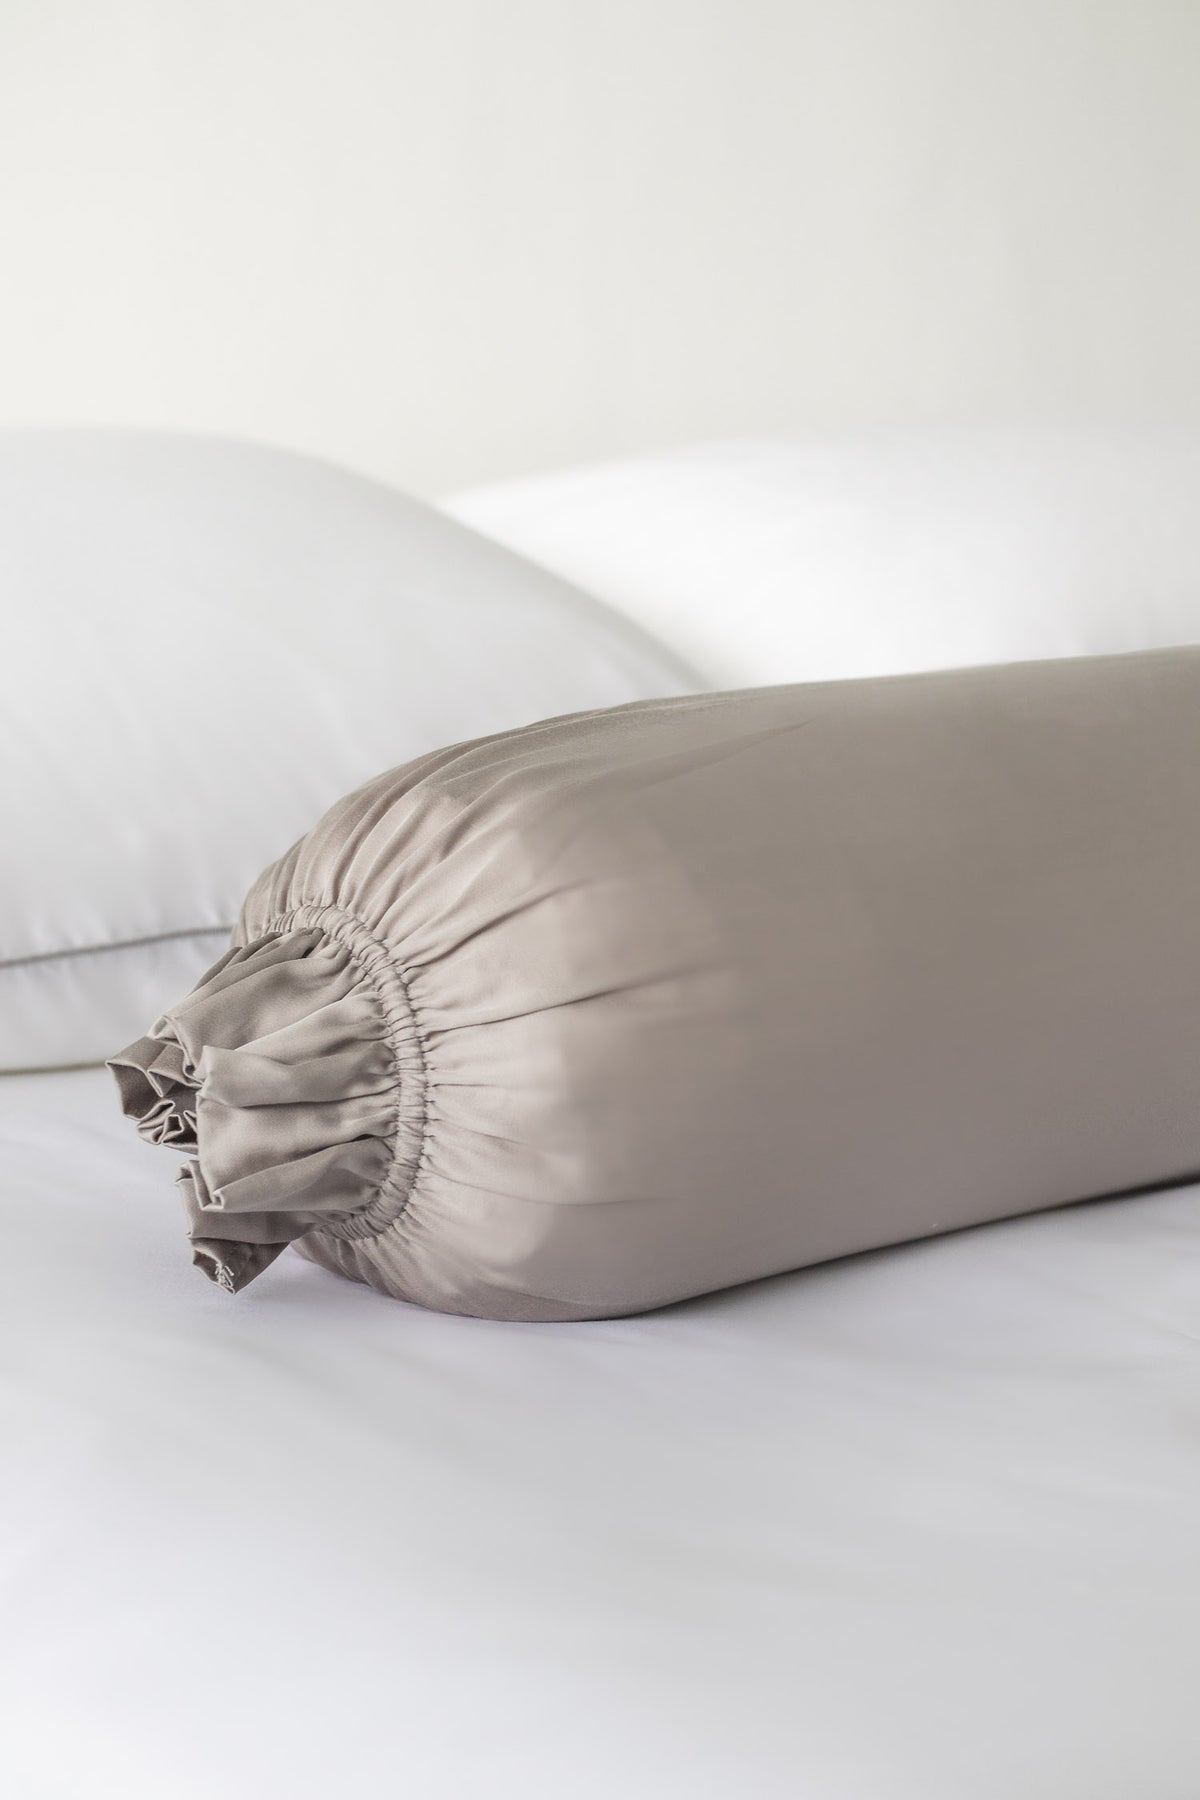 ava and ava ph organic bamboo lyocell bolster case / hotdog pillow / long pillow / po-tsim pillowcase in gray with white sheets